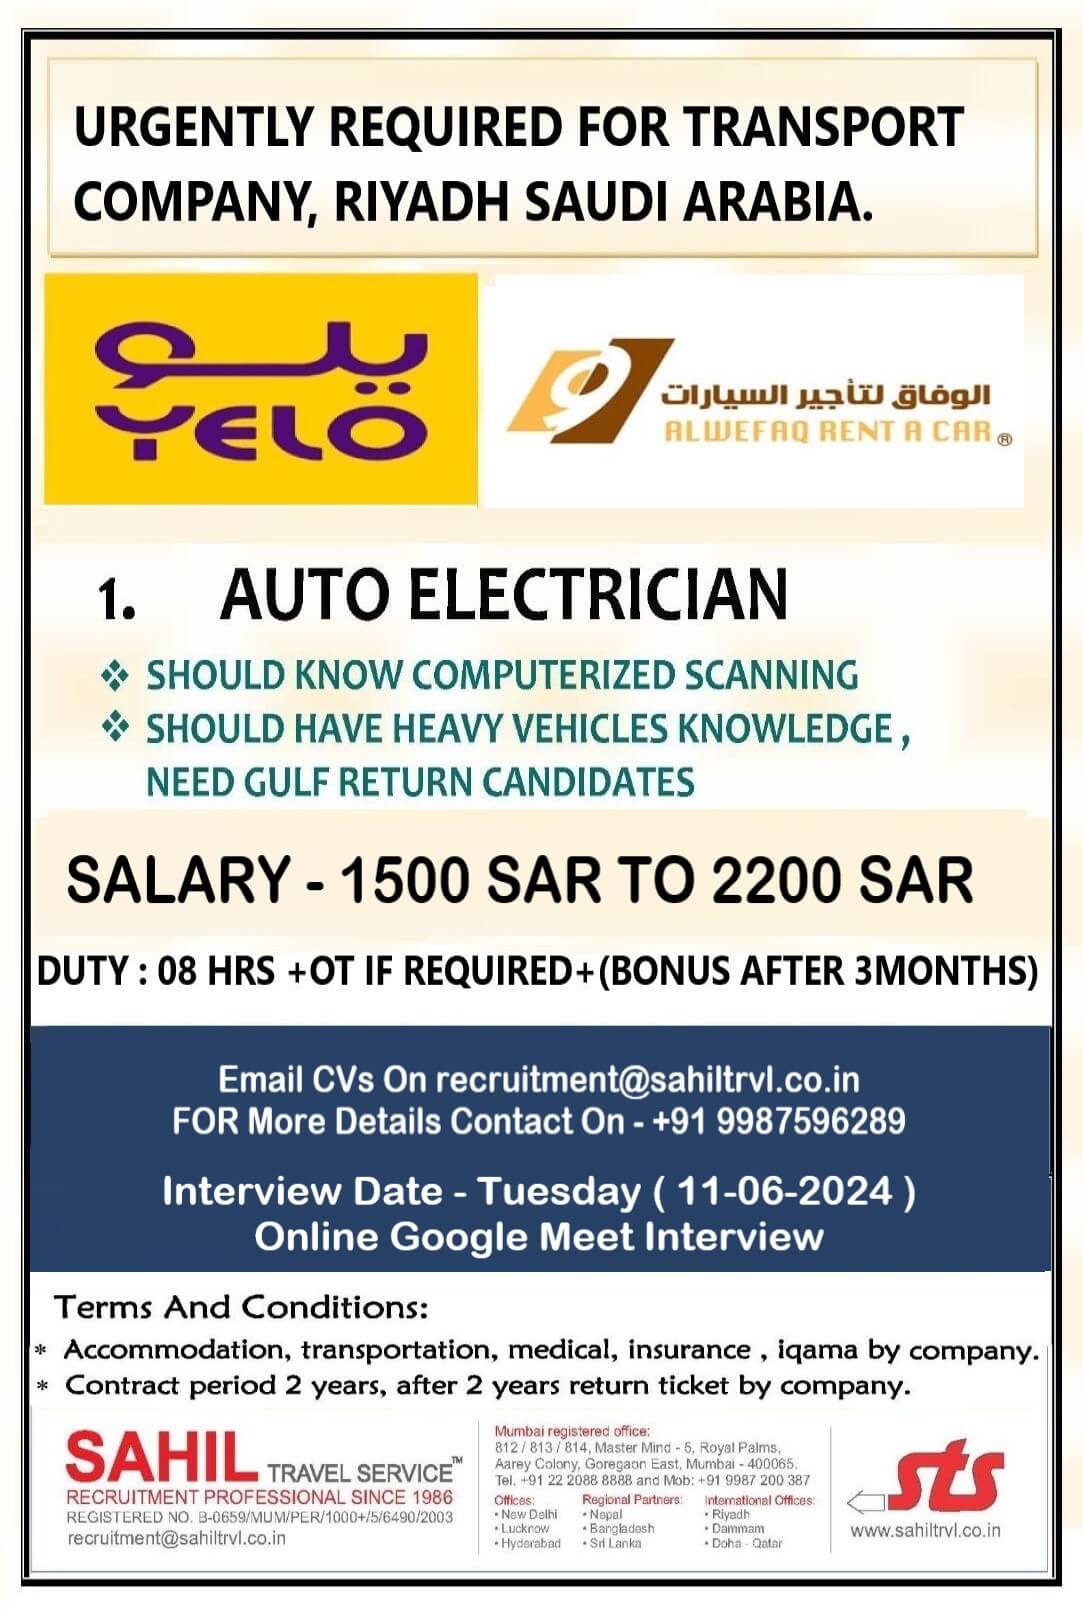 REQUIRED FOR AUTO ELECTRICIAN IN YELO AL WEEFAQ COMPANY IN RIYADH SAUDI ARABIA